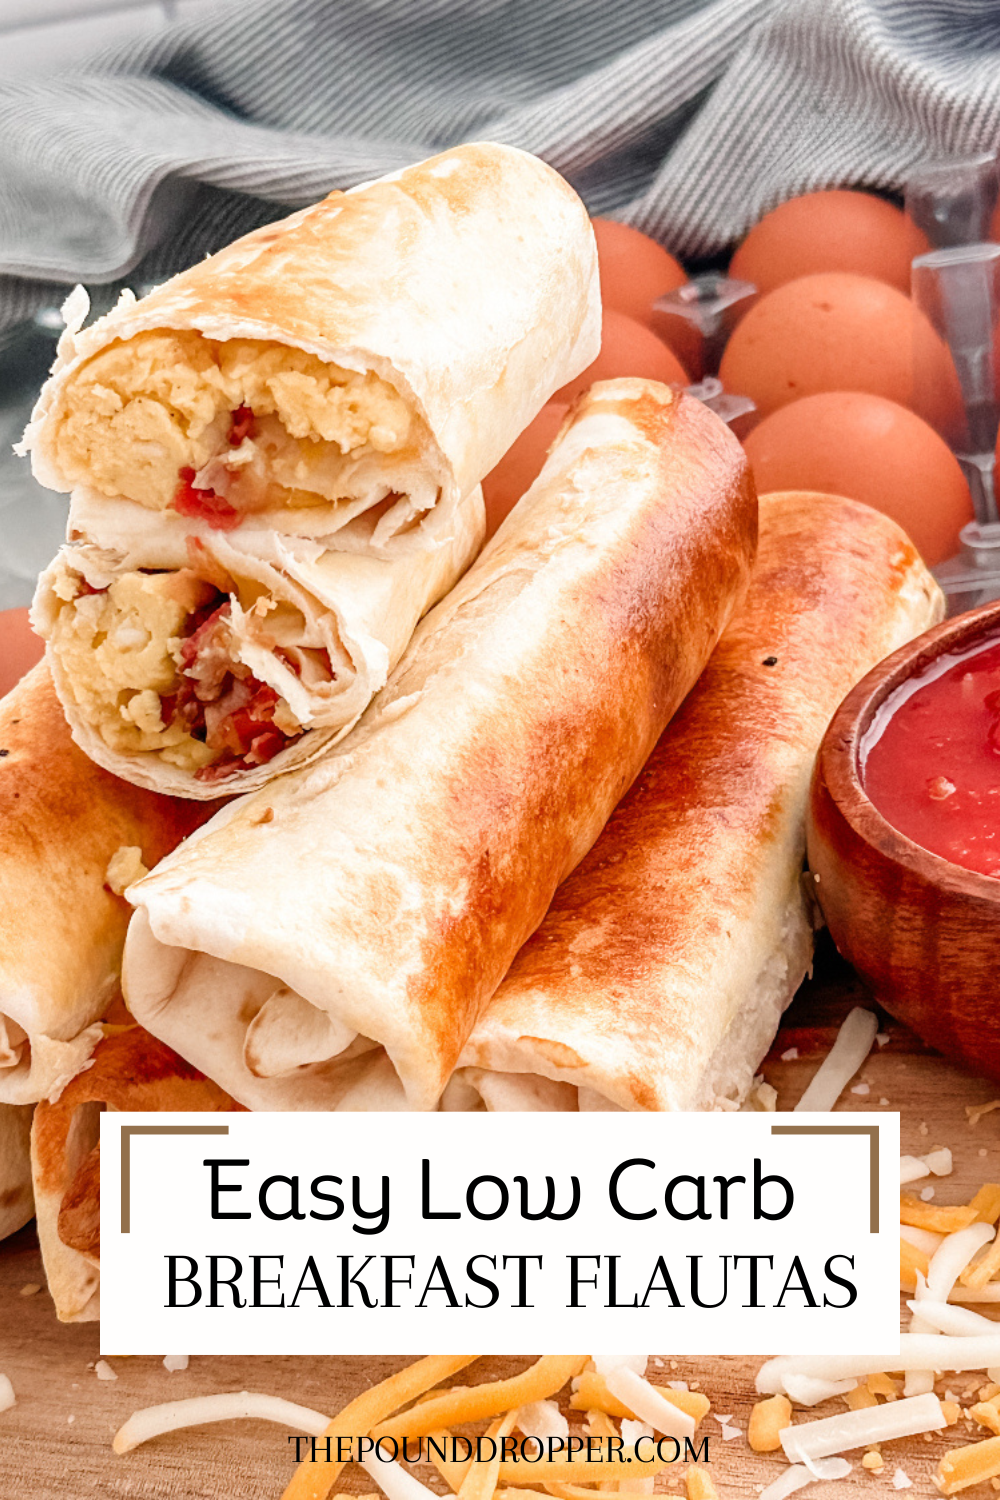 Easy Low Carb Breakfast Flautas via @pounddropper